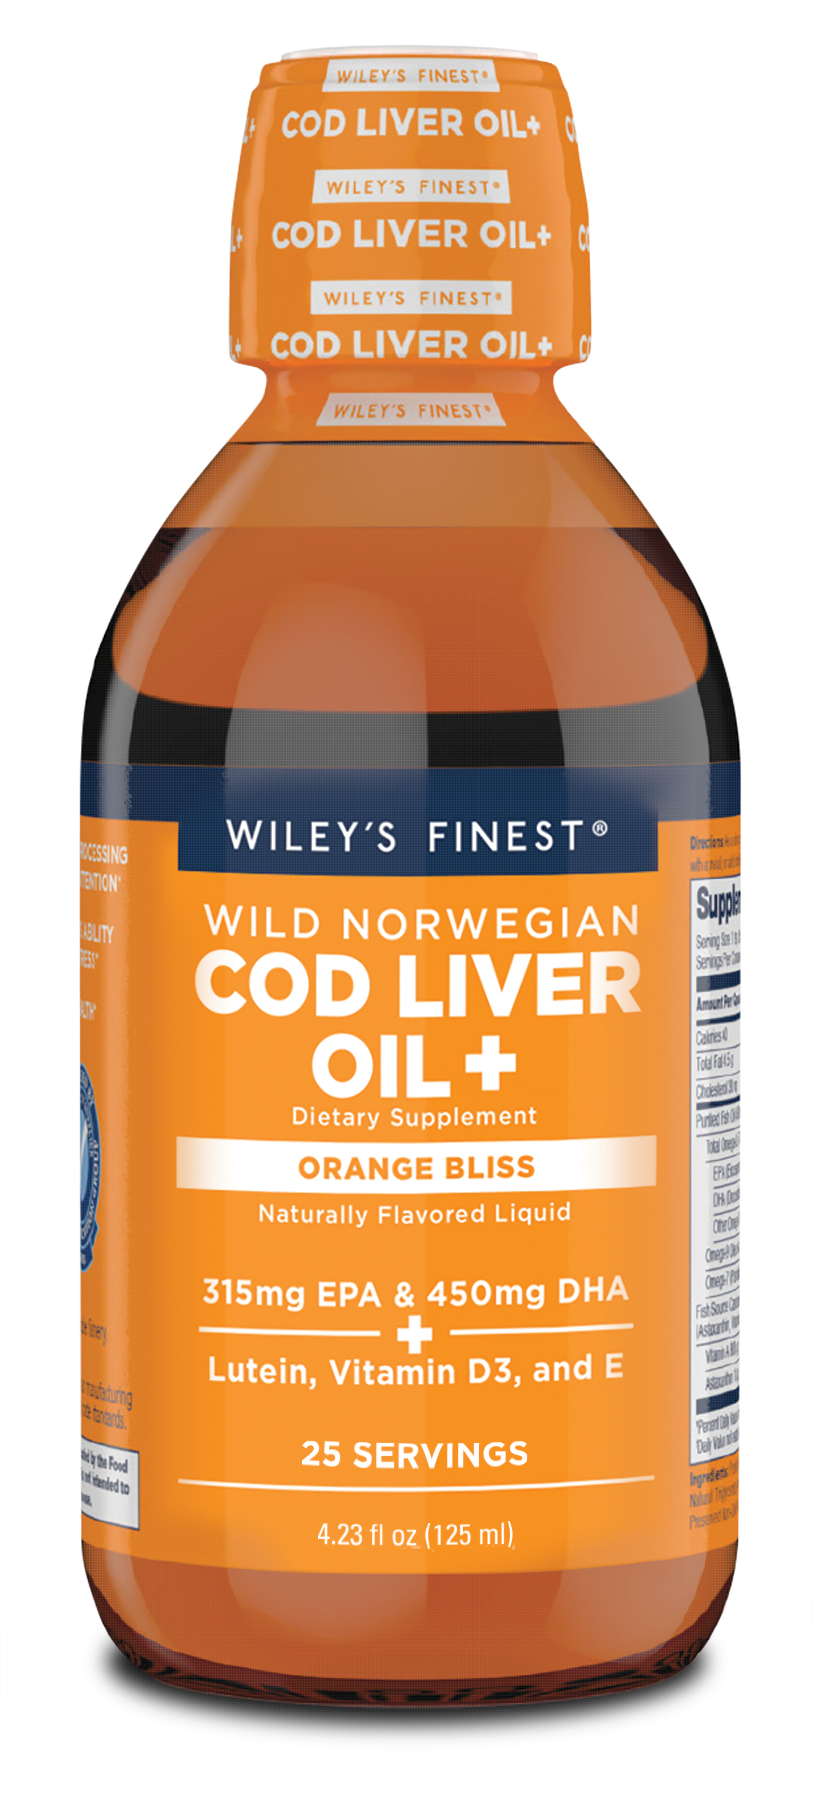 4oz bottle of Wiley's Finest Cod Liver Oil Plus